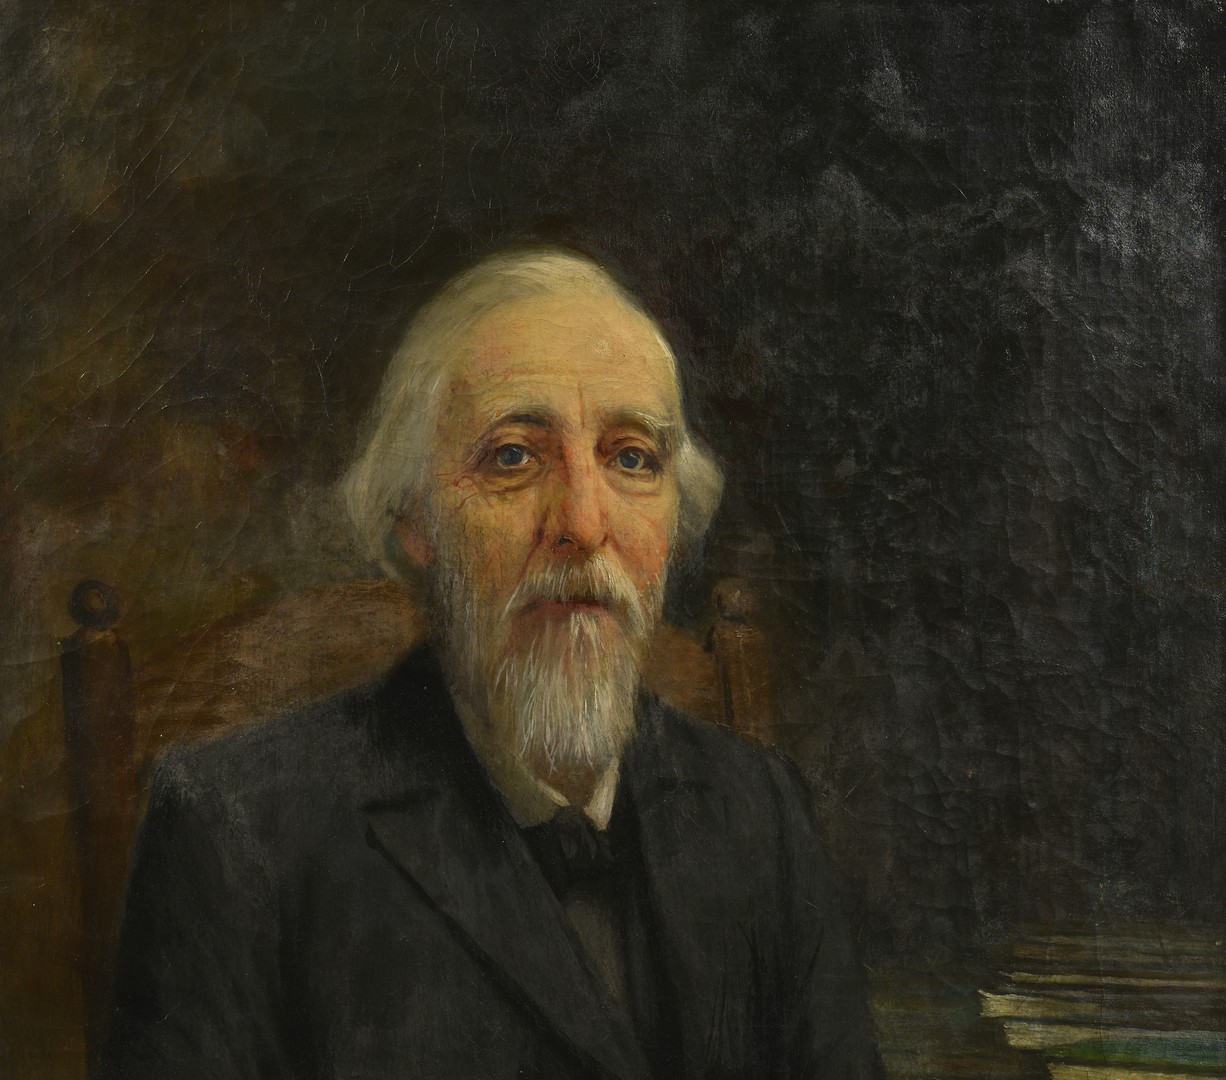 Lot 214: Older Gentleman Portrait, Attr. Lloyd Branson